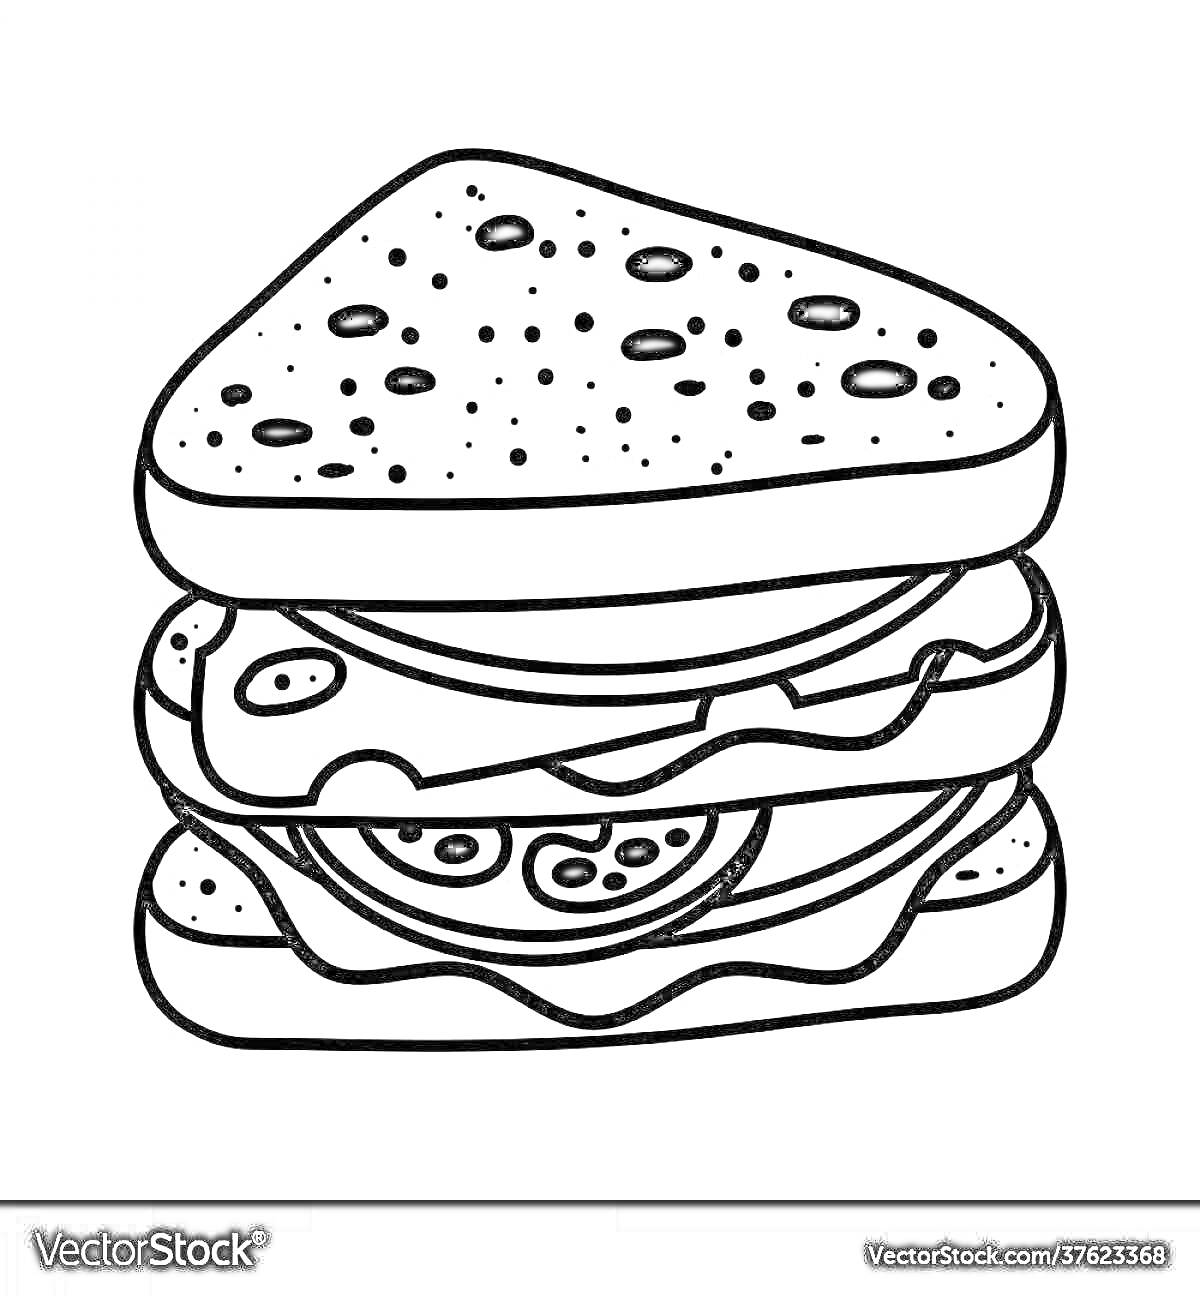 На раскраске изображено: Бутерброд, Колбаса, Хлеб, Салат, Сыр, Еда, Перекус